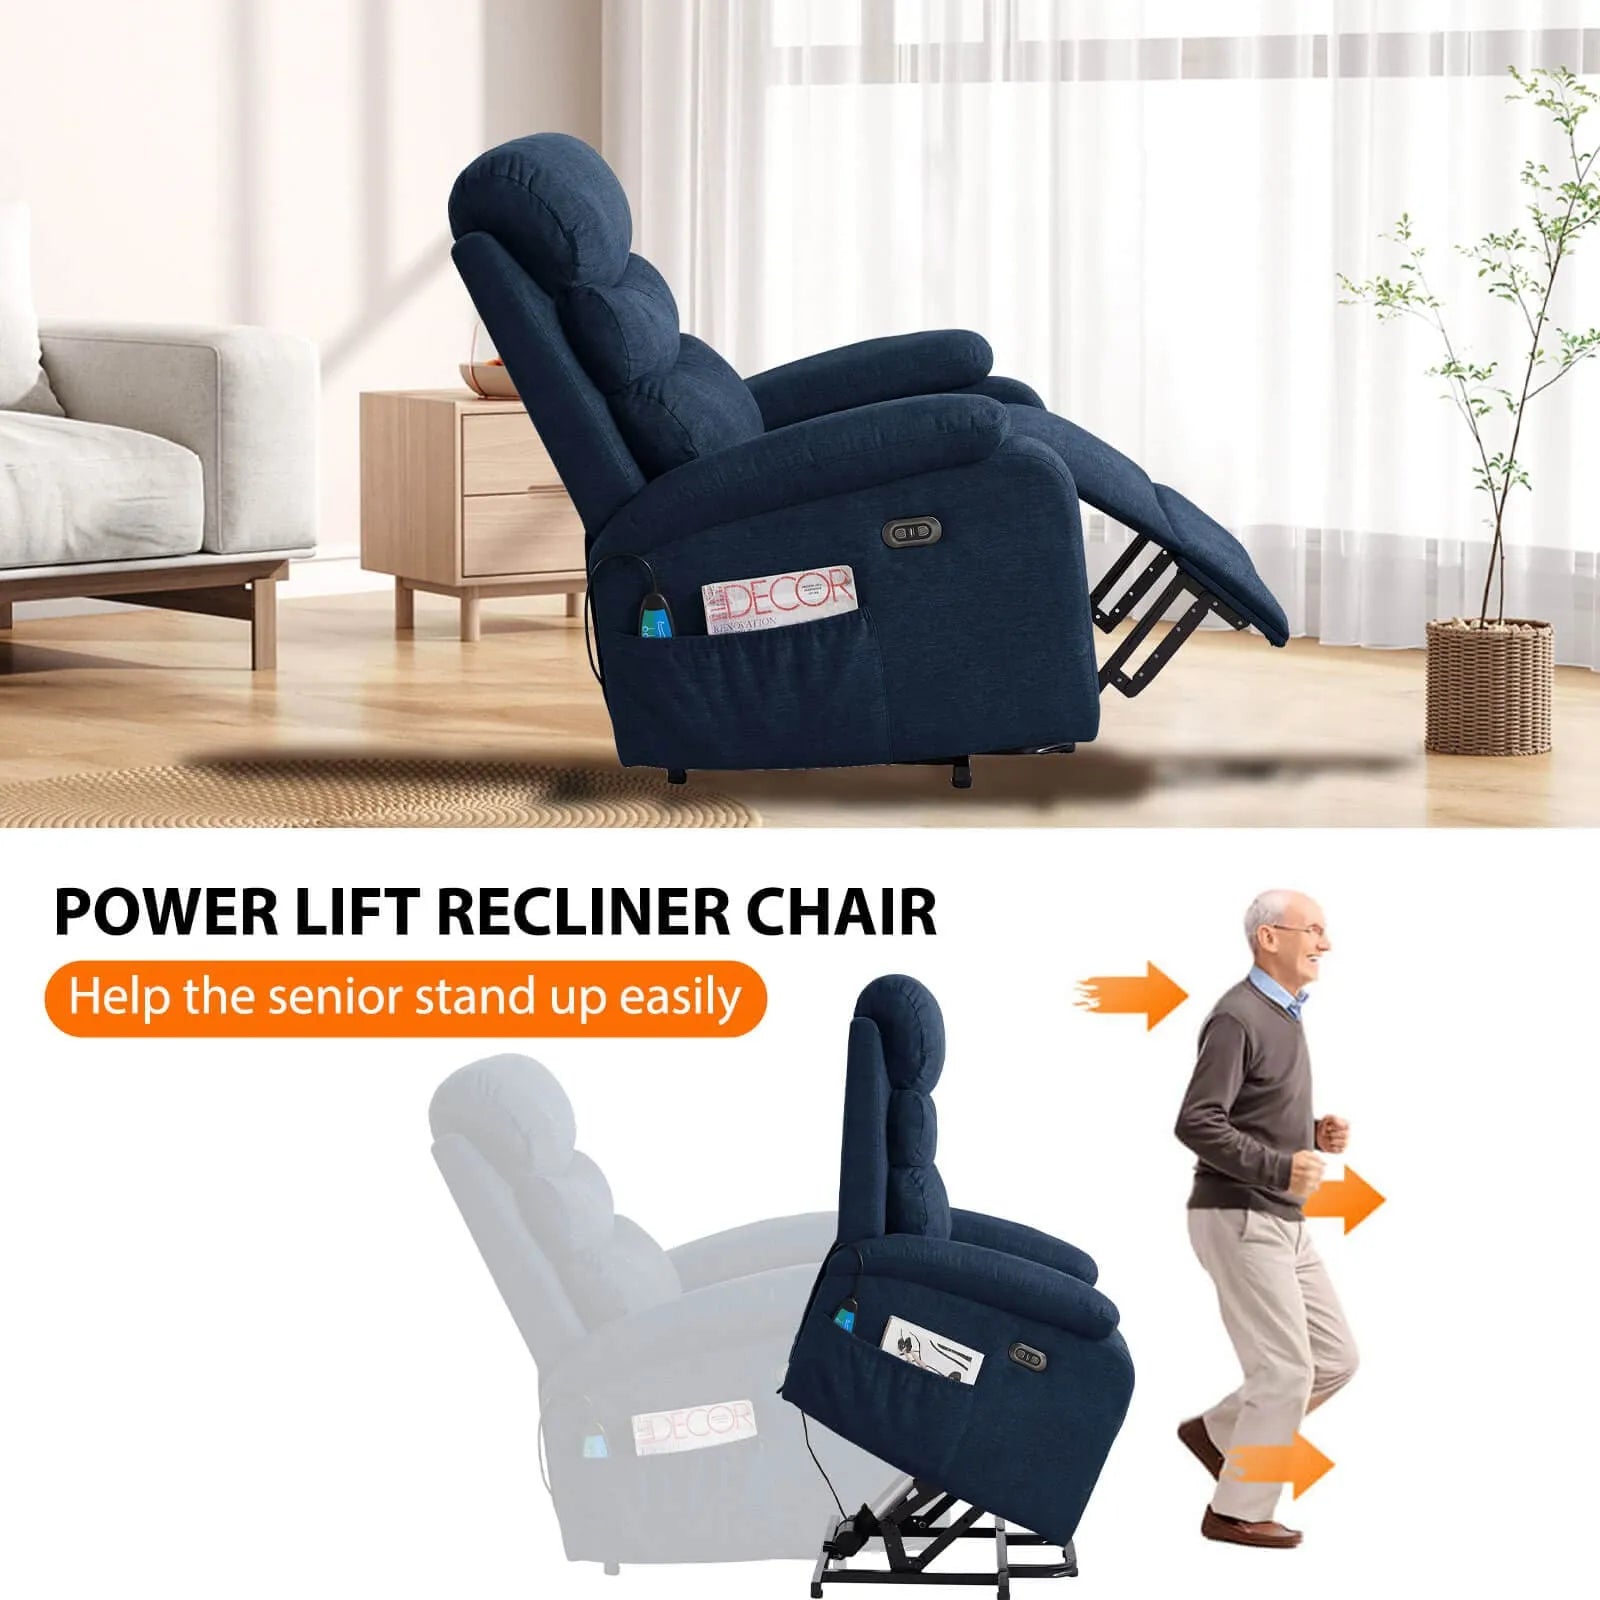 Power lift recliner chair for seniors